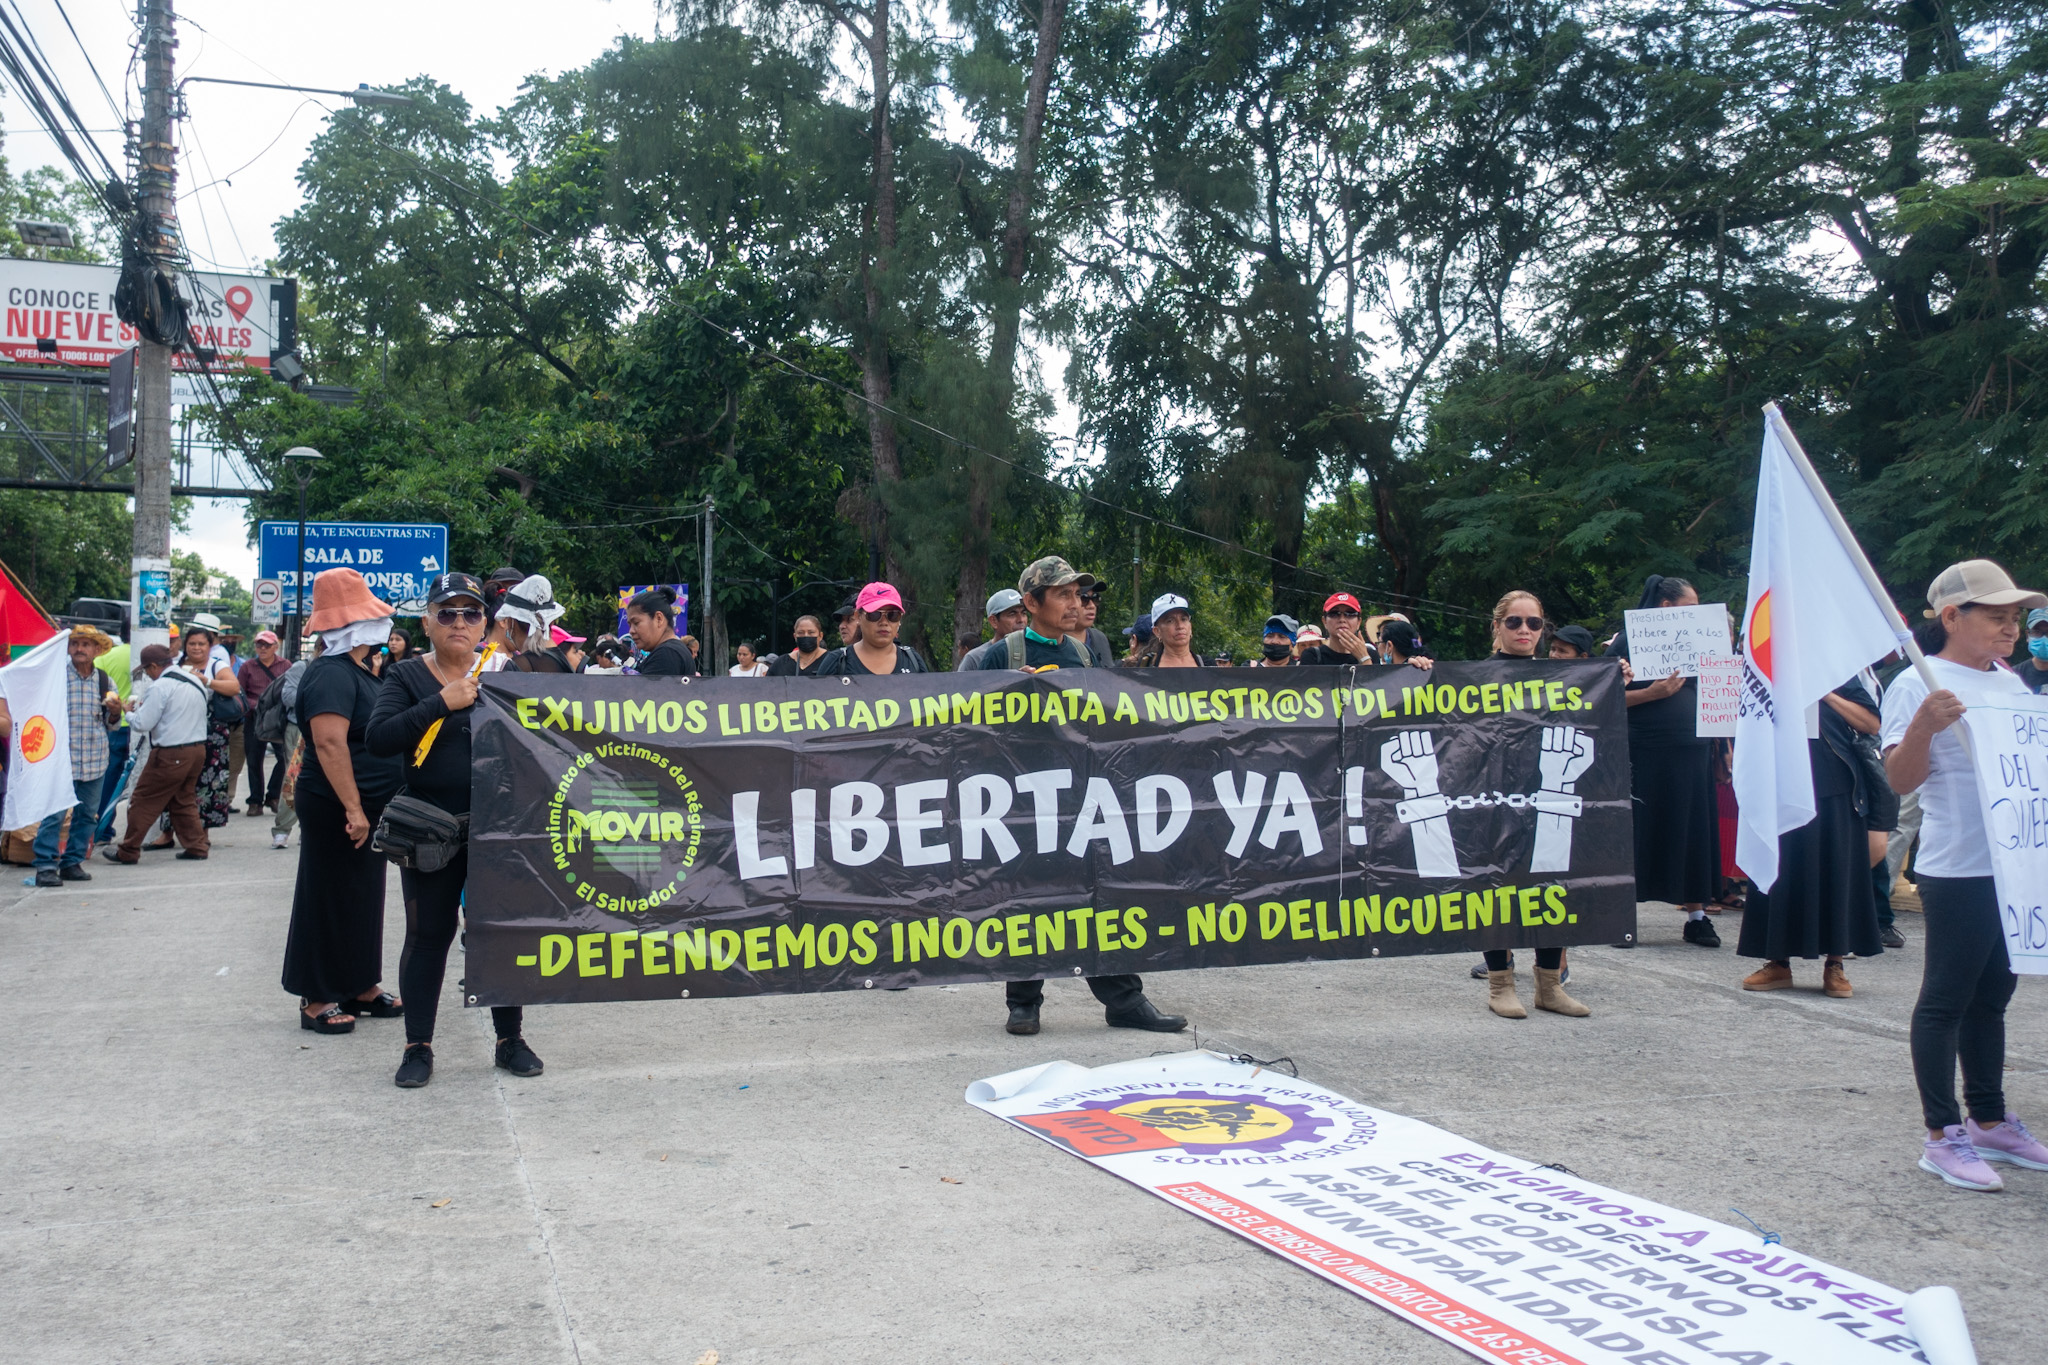 MOVIR members with banner that says "Libertad Ya"